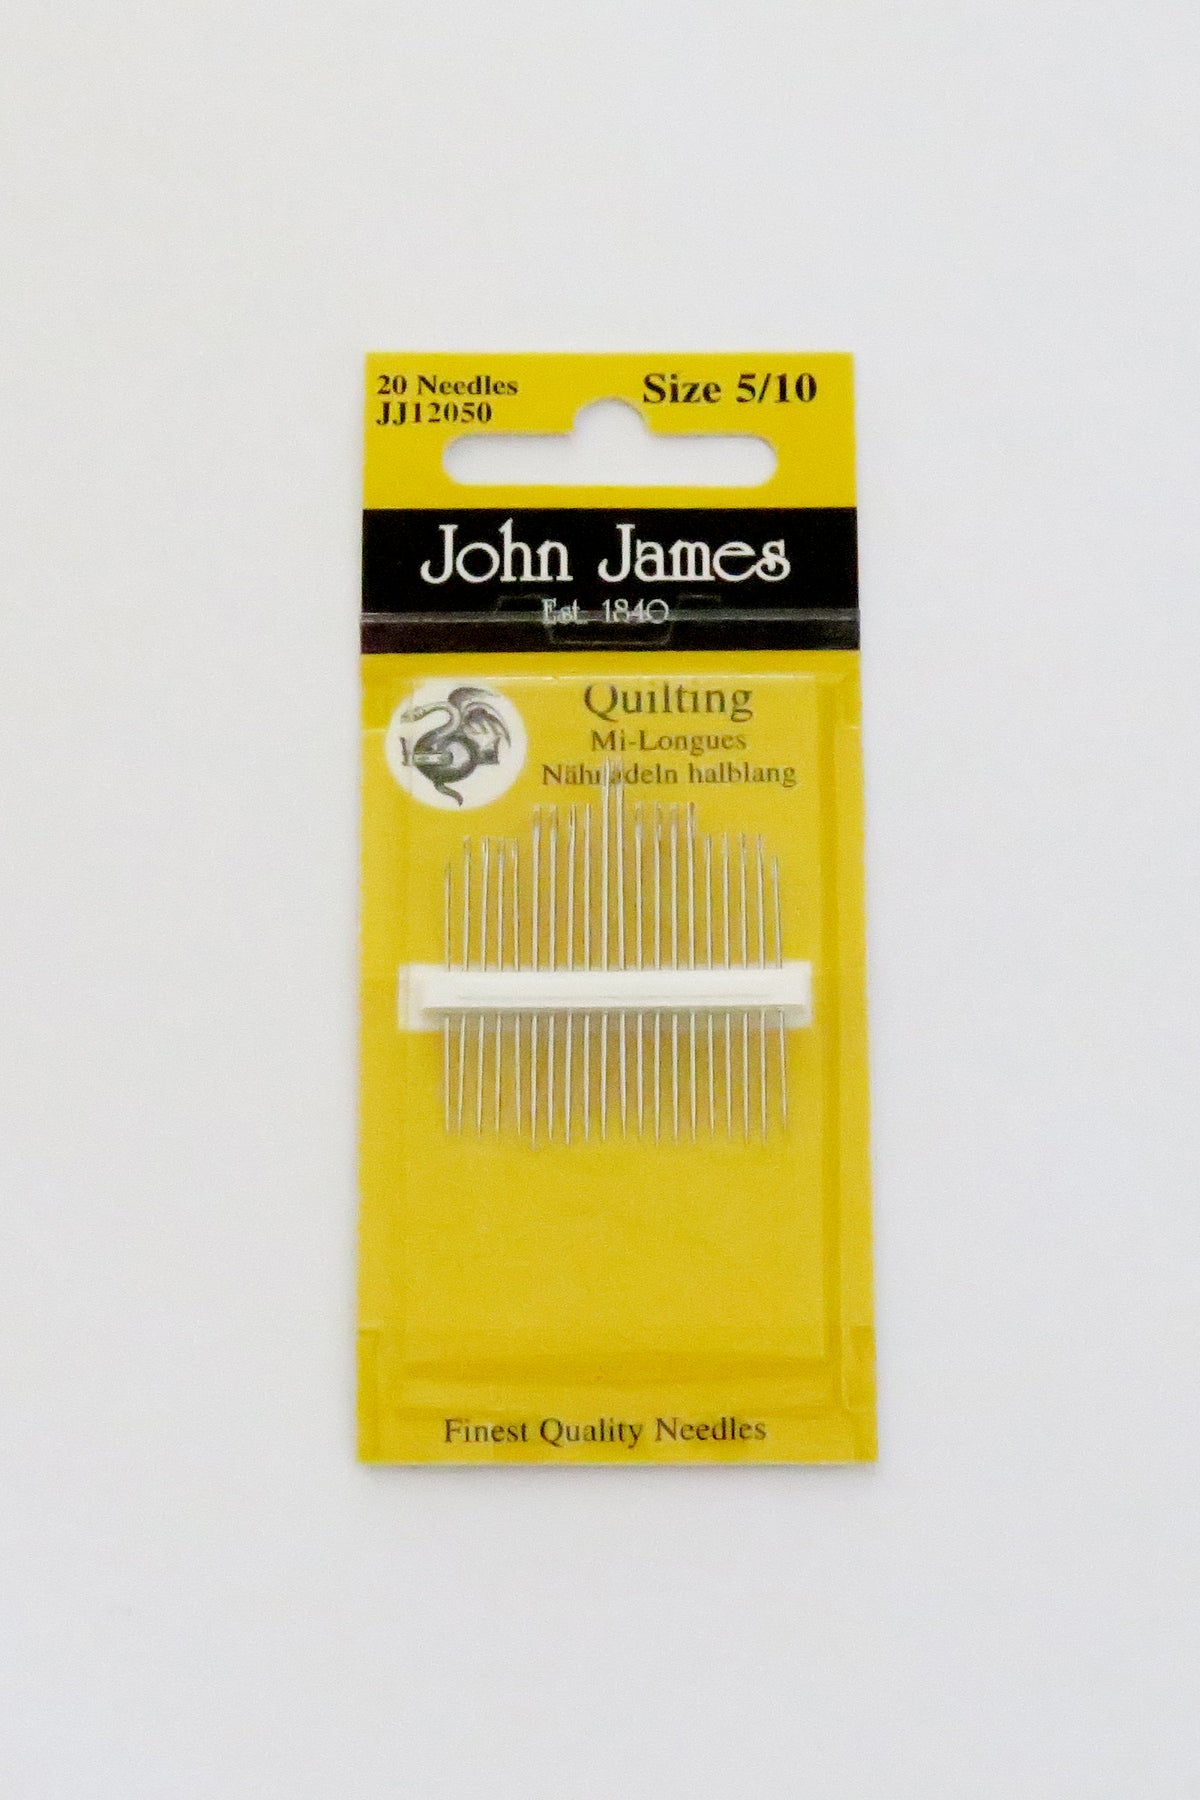 John James Quilting str. 5/10